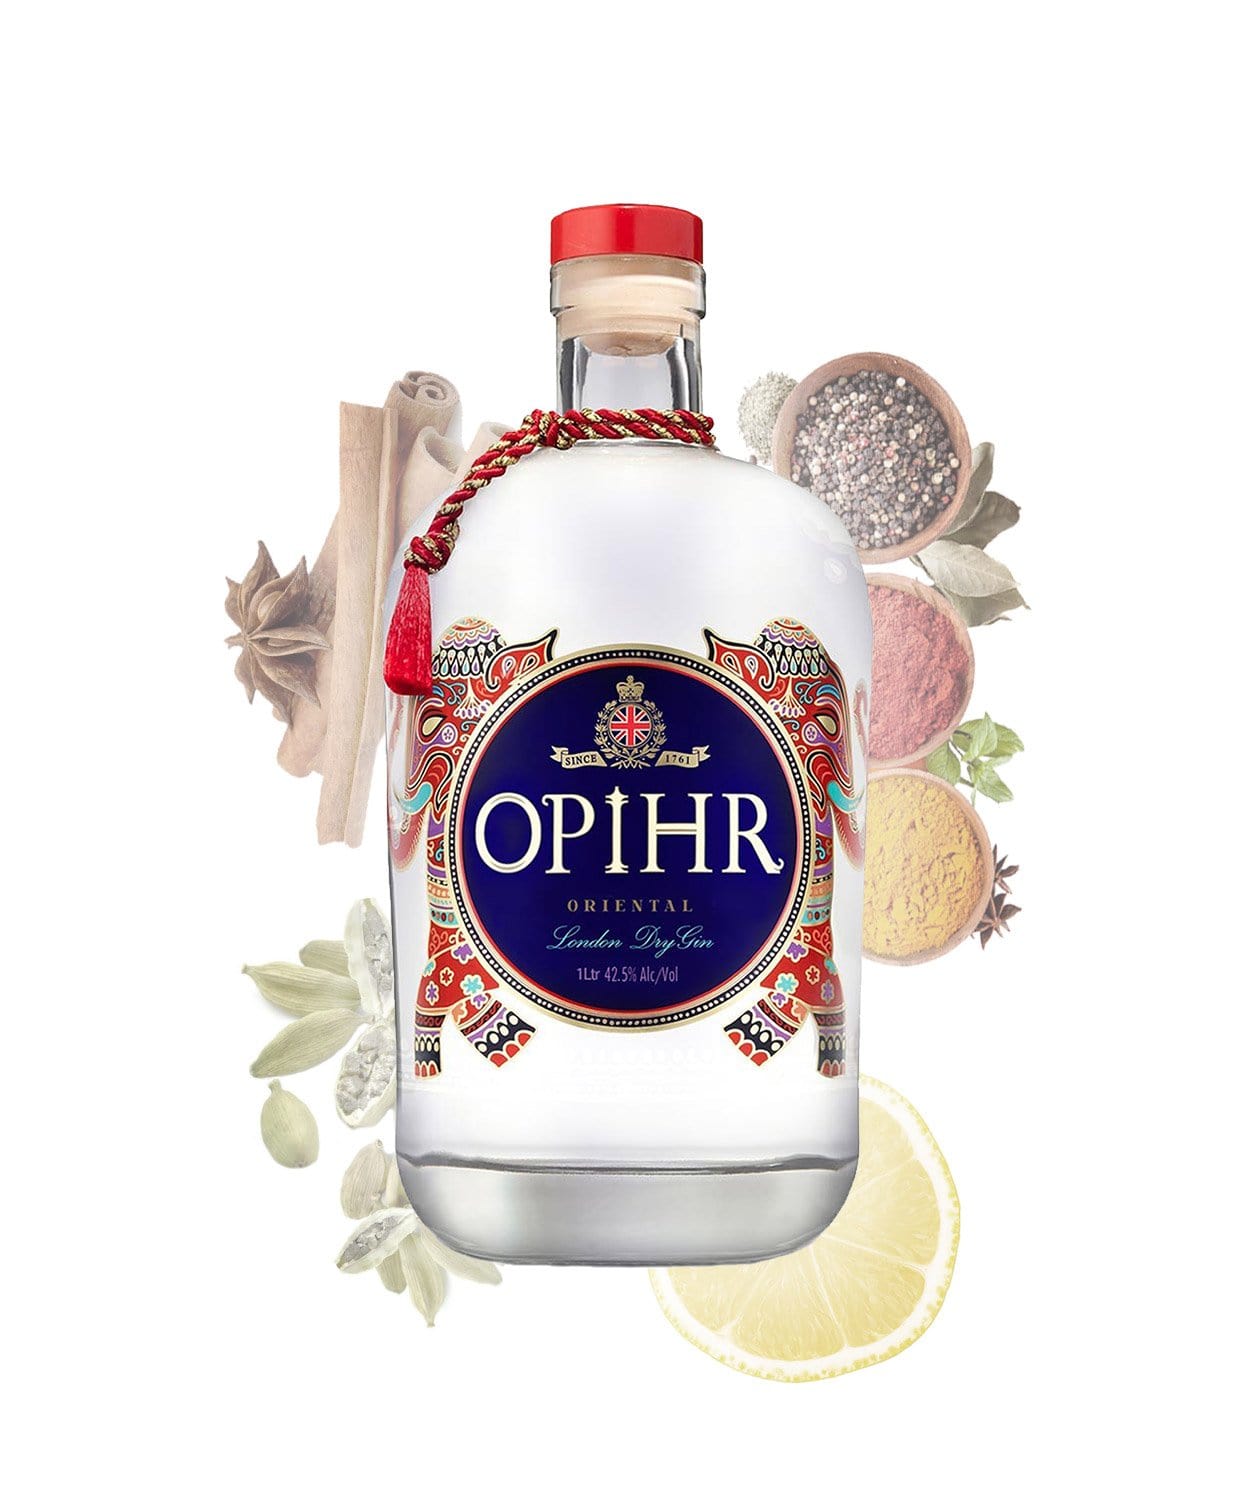 Opihr Oriental Spiced London Gin 0,7l (42,2%) Dry